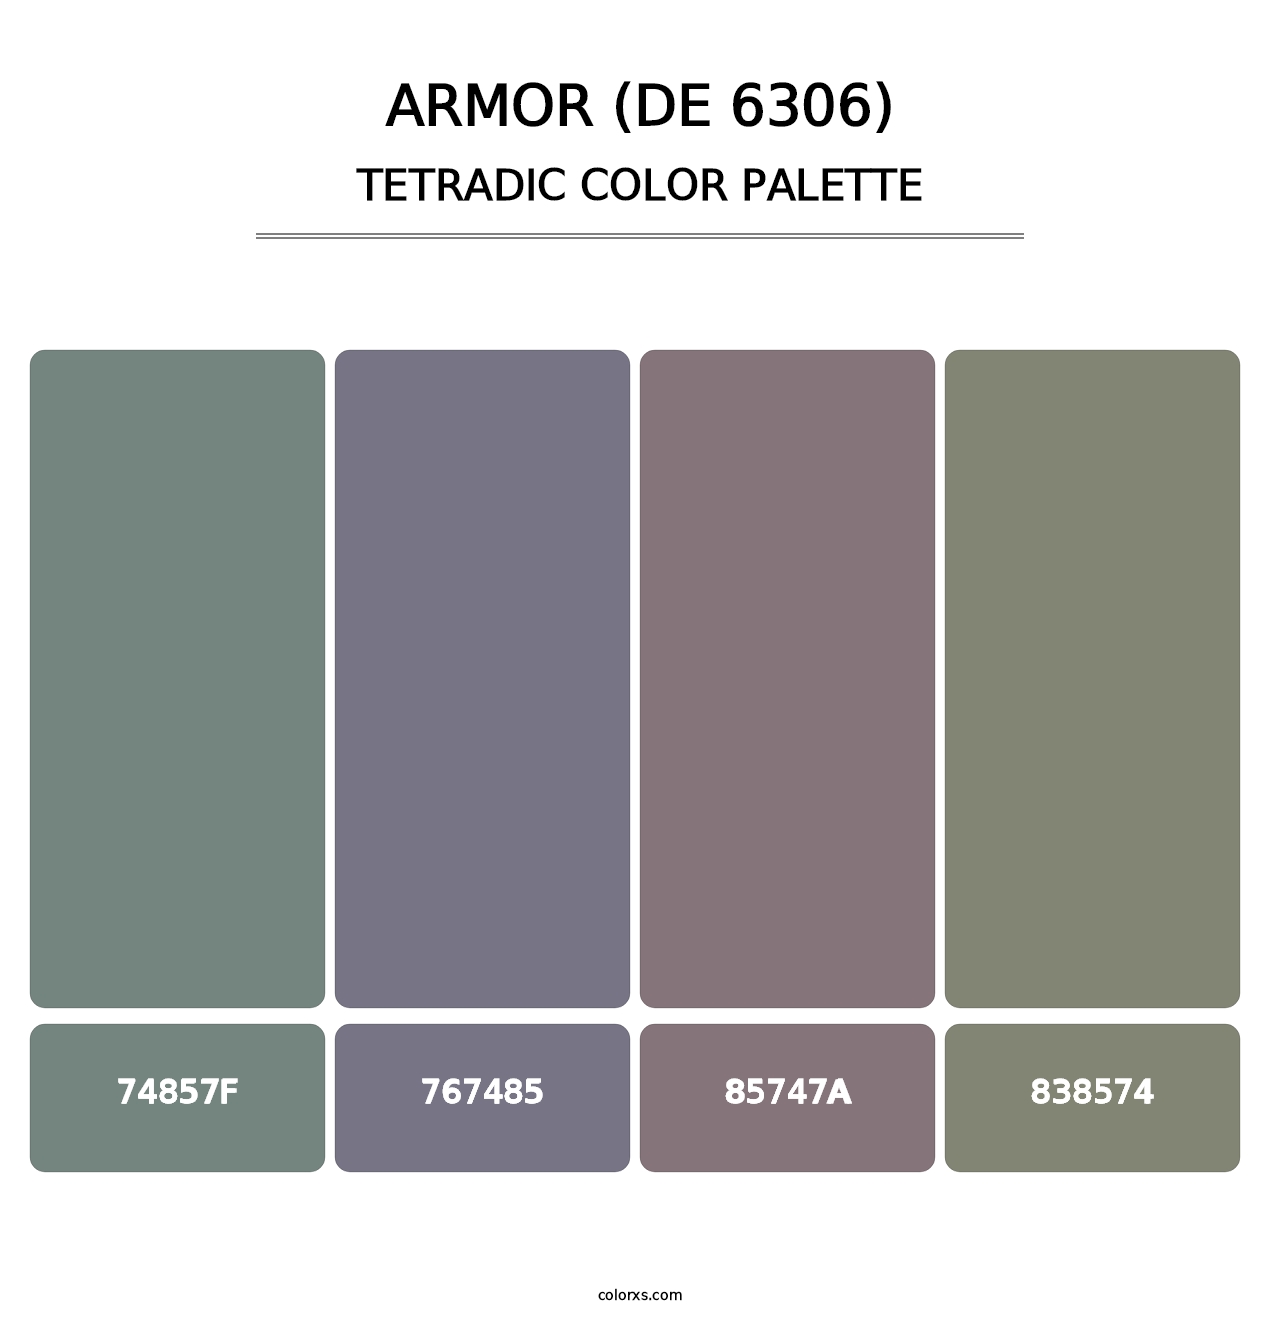 Armor (DE 6306) - Tetradic Color Palette